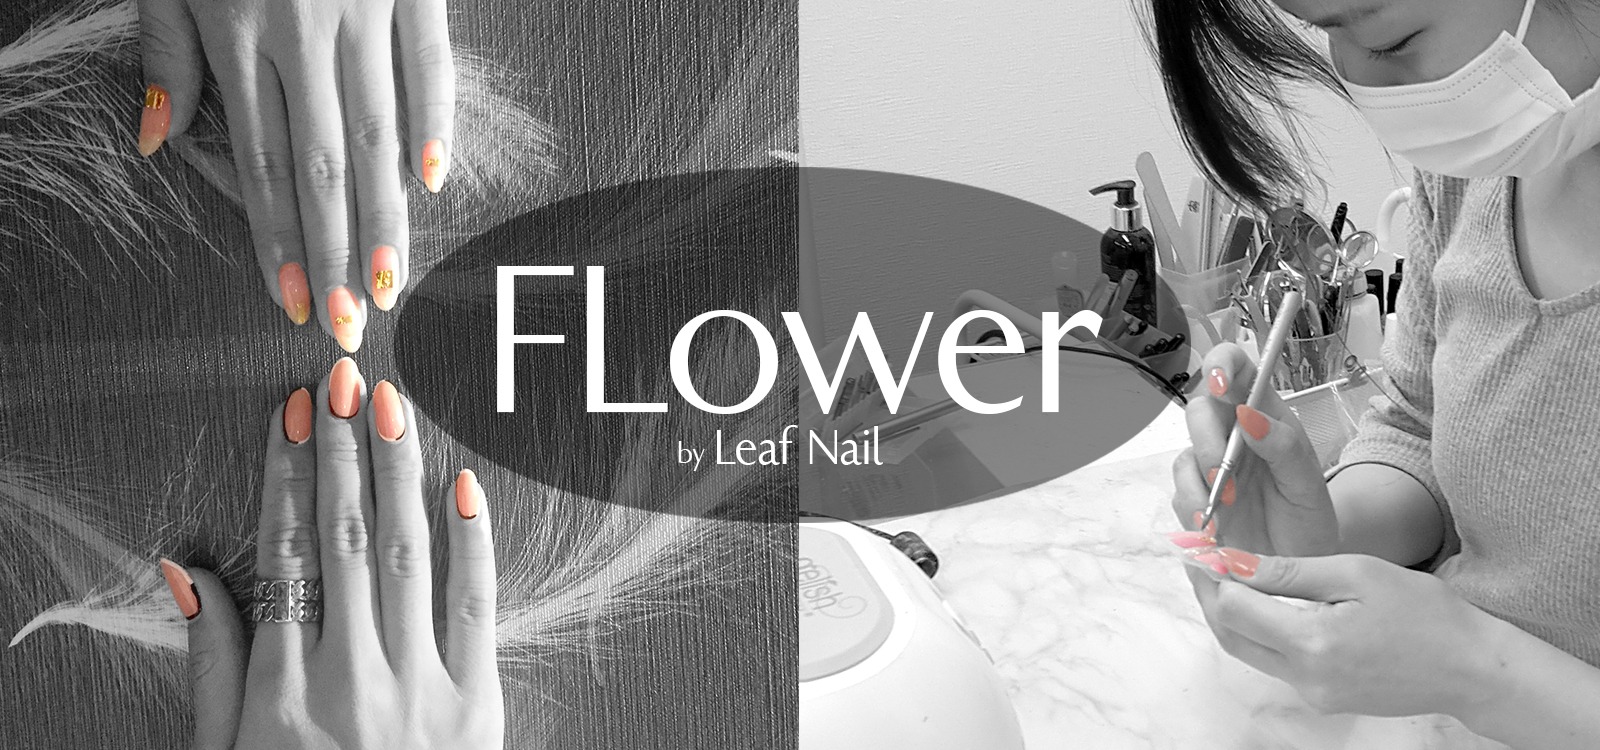 FLower by Leaf Nail